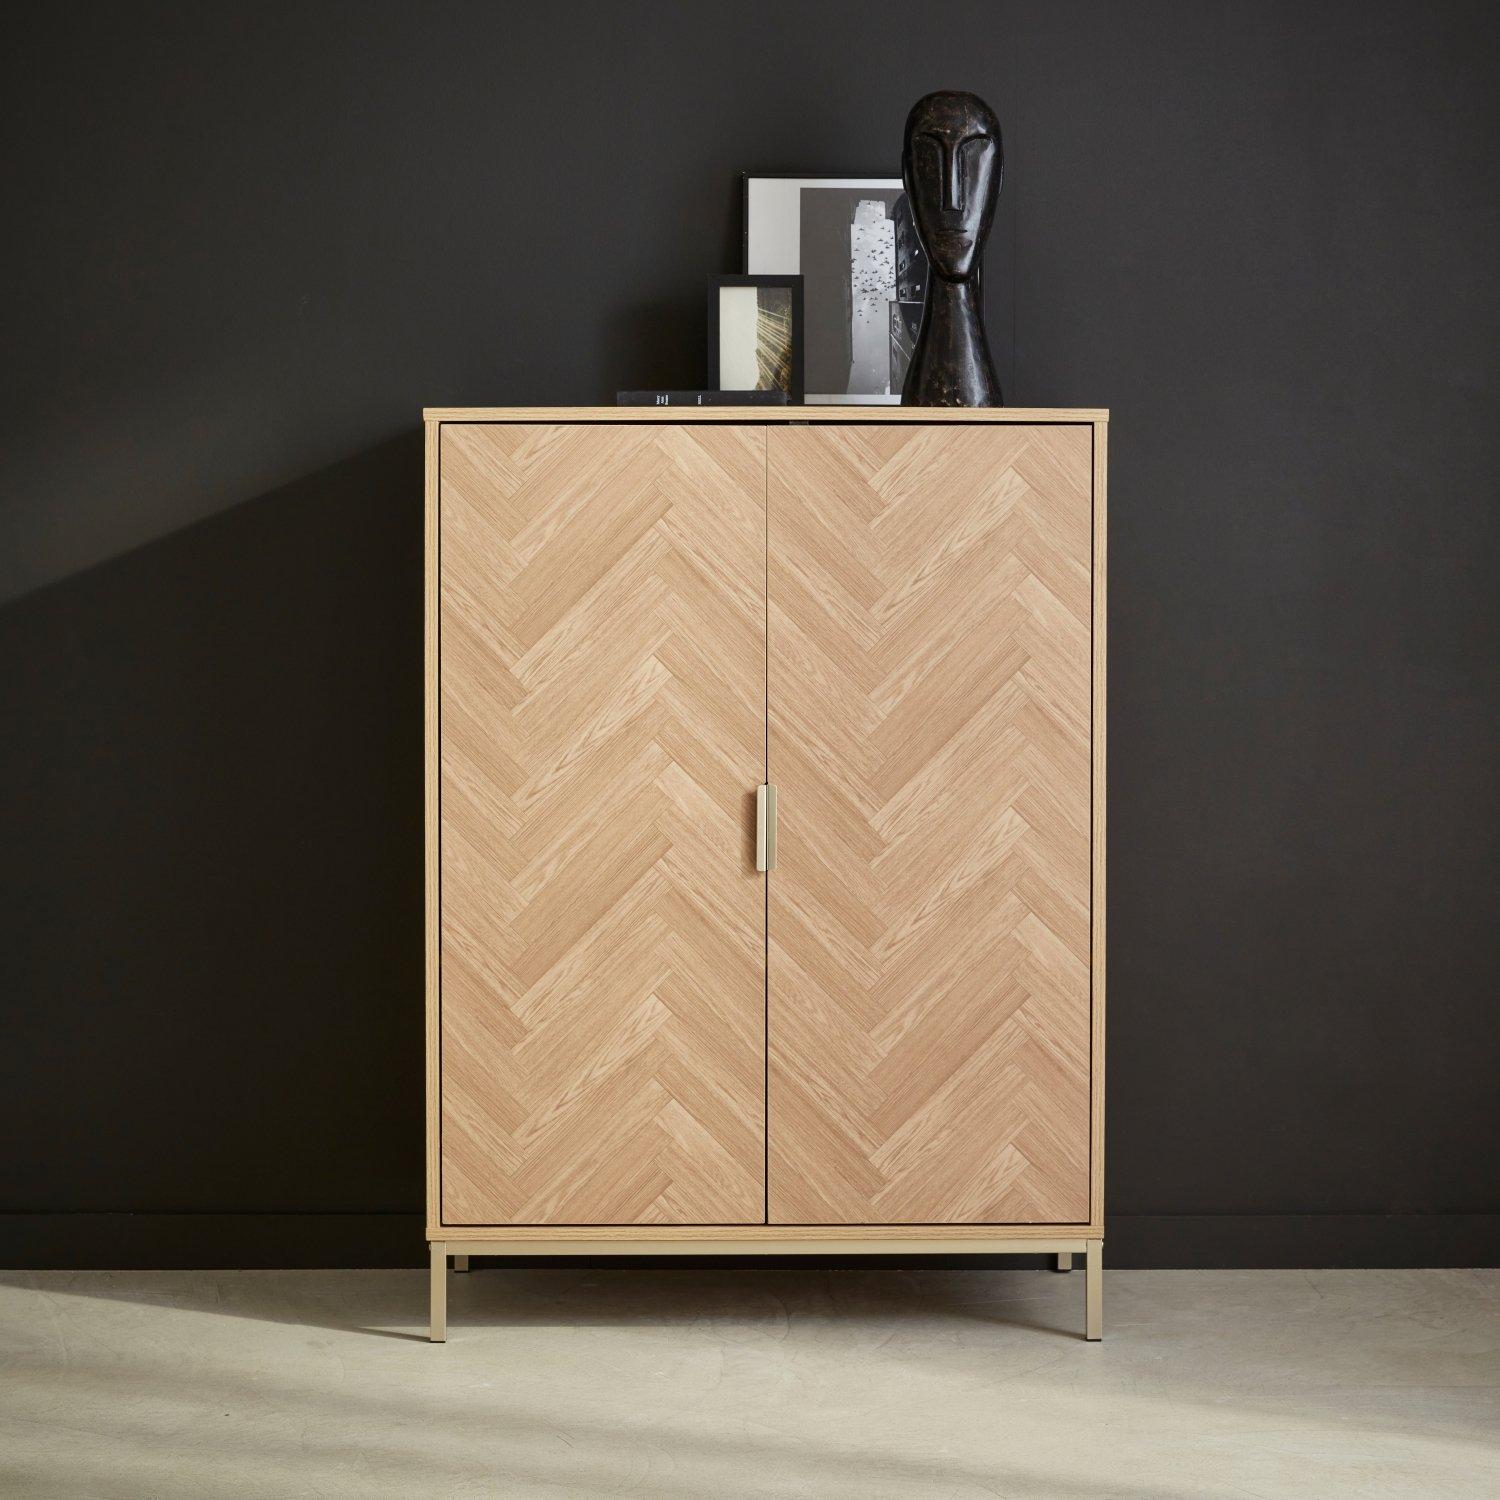 Herringbone Parquet Wood-style 2-door Storage Cabinet